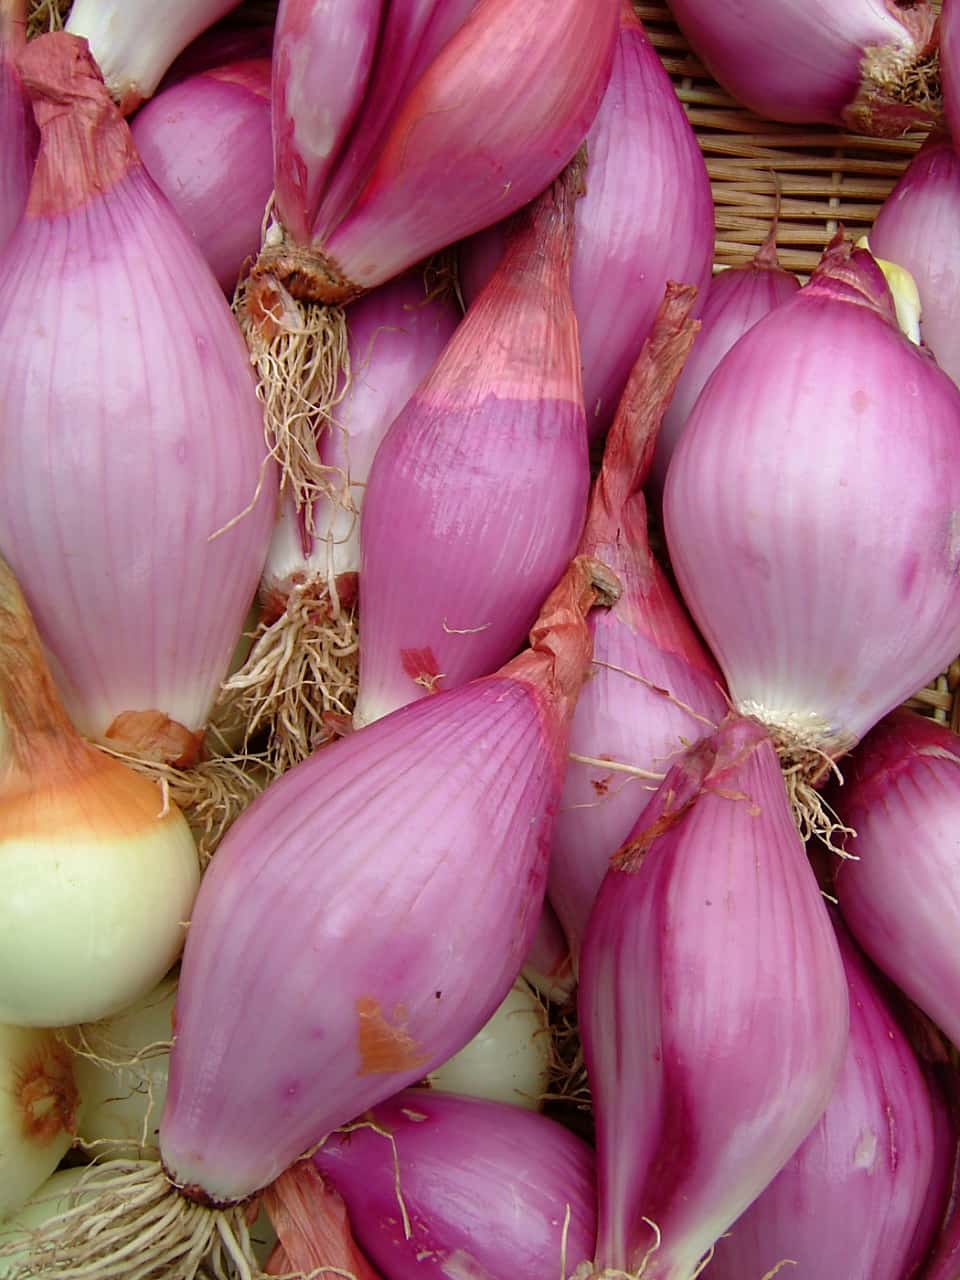 types of onion plants